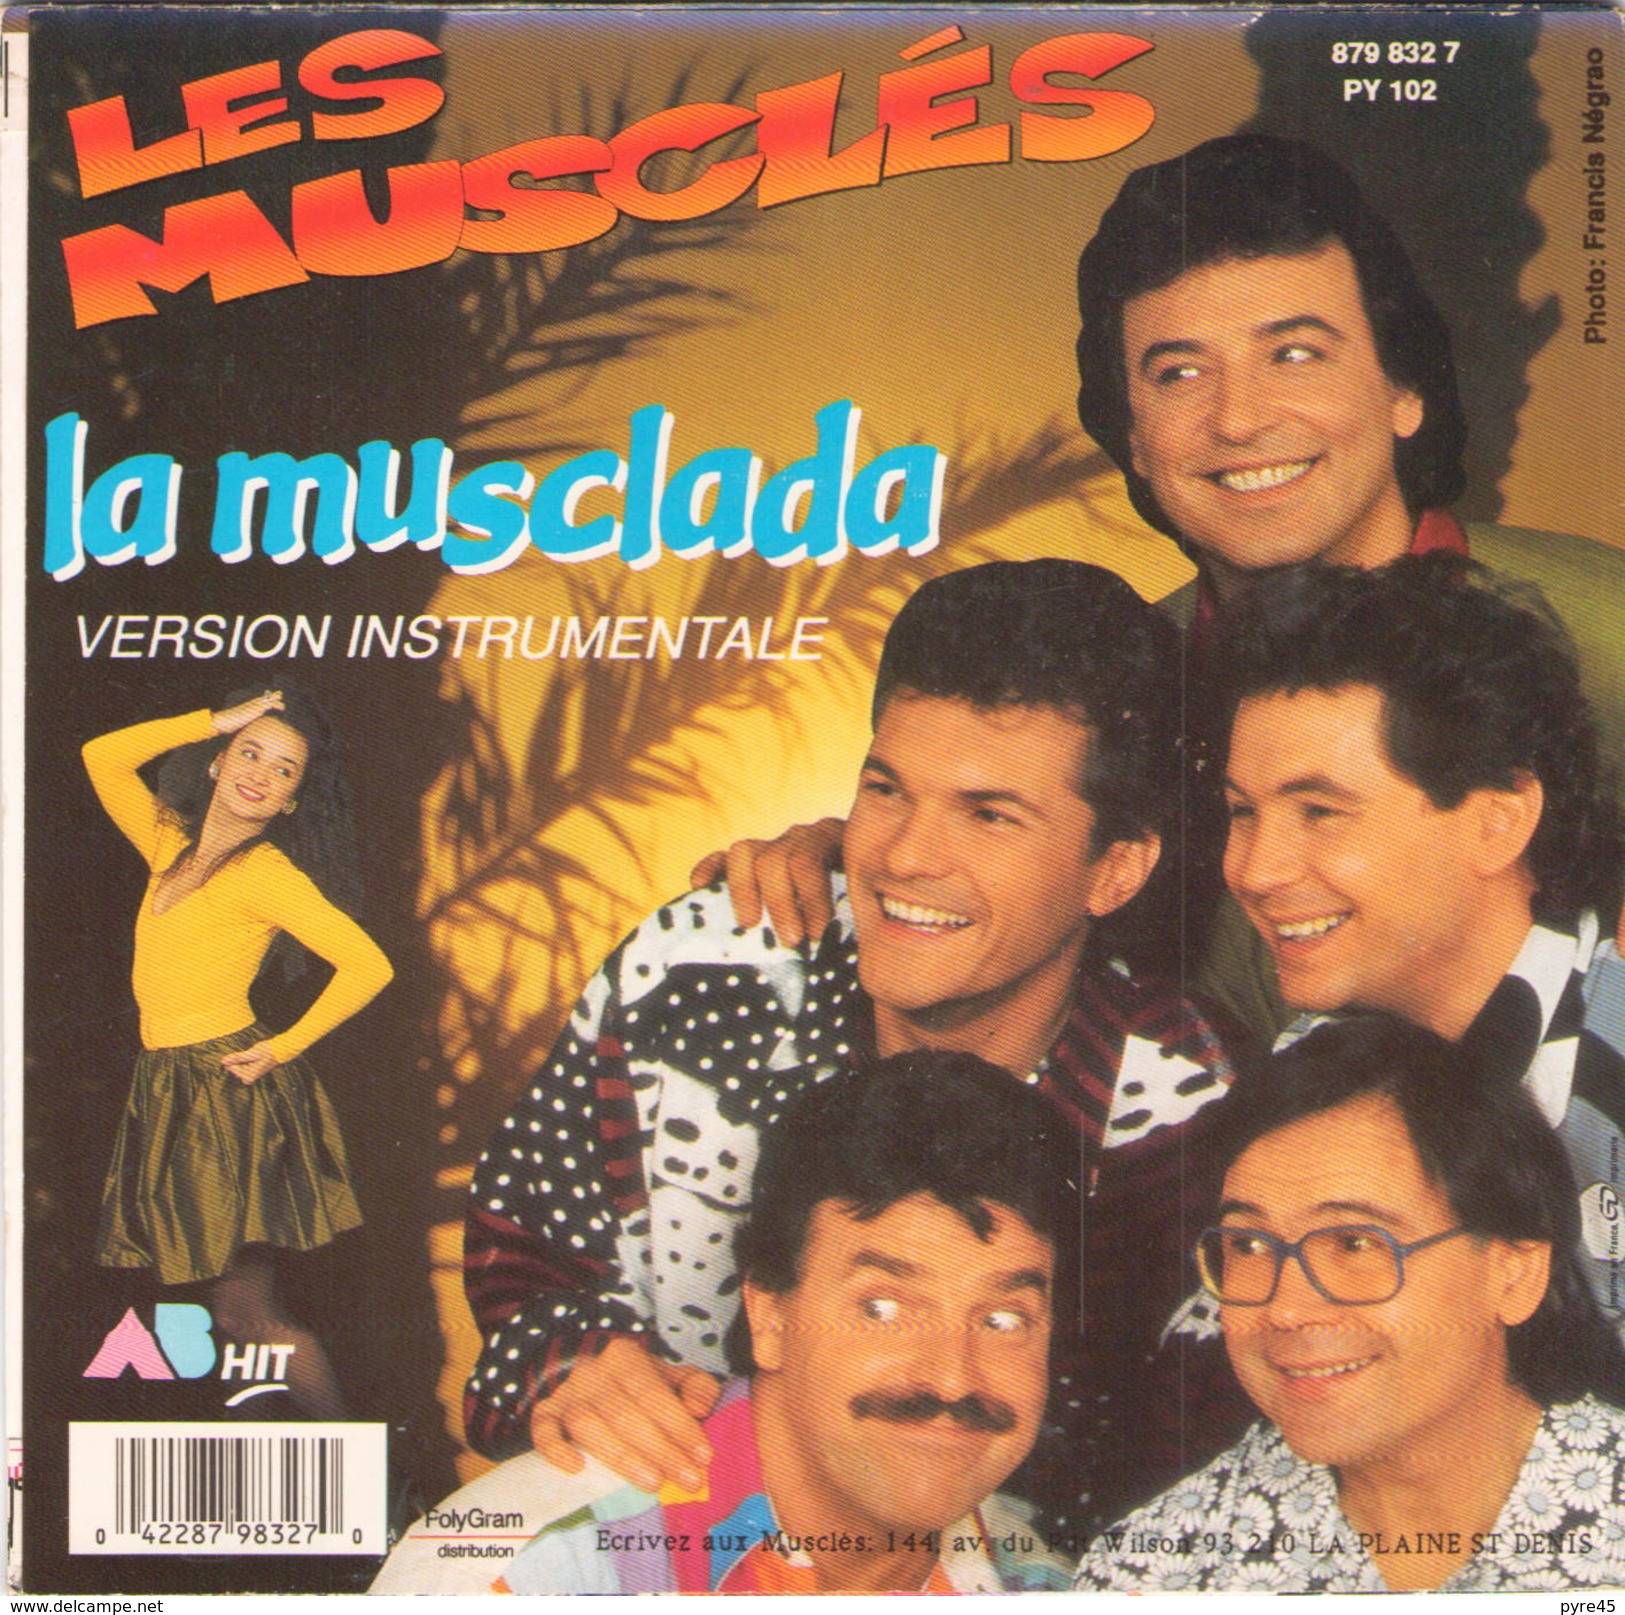 45 T Les Muscles La Musclada 1990 AB Hit 879832 - Humor, Cabaret